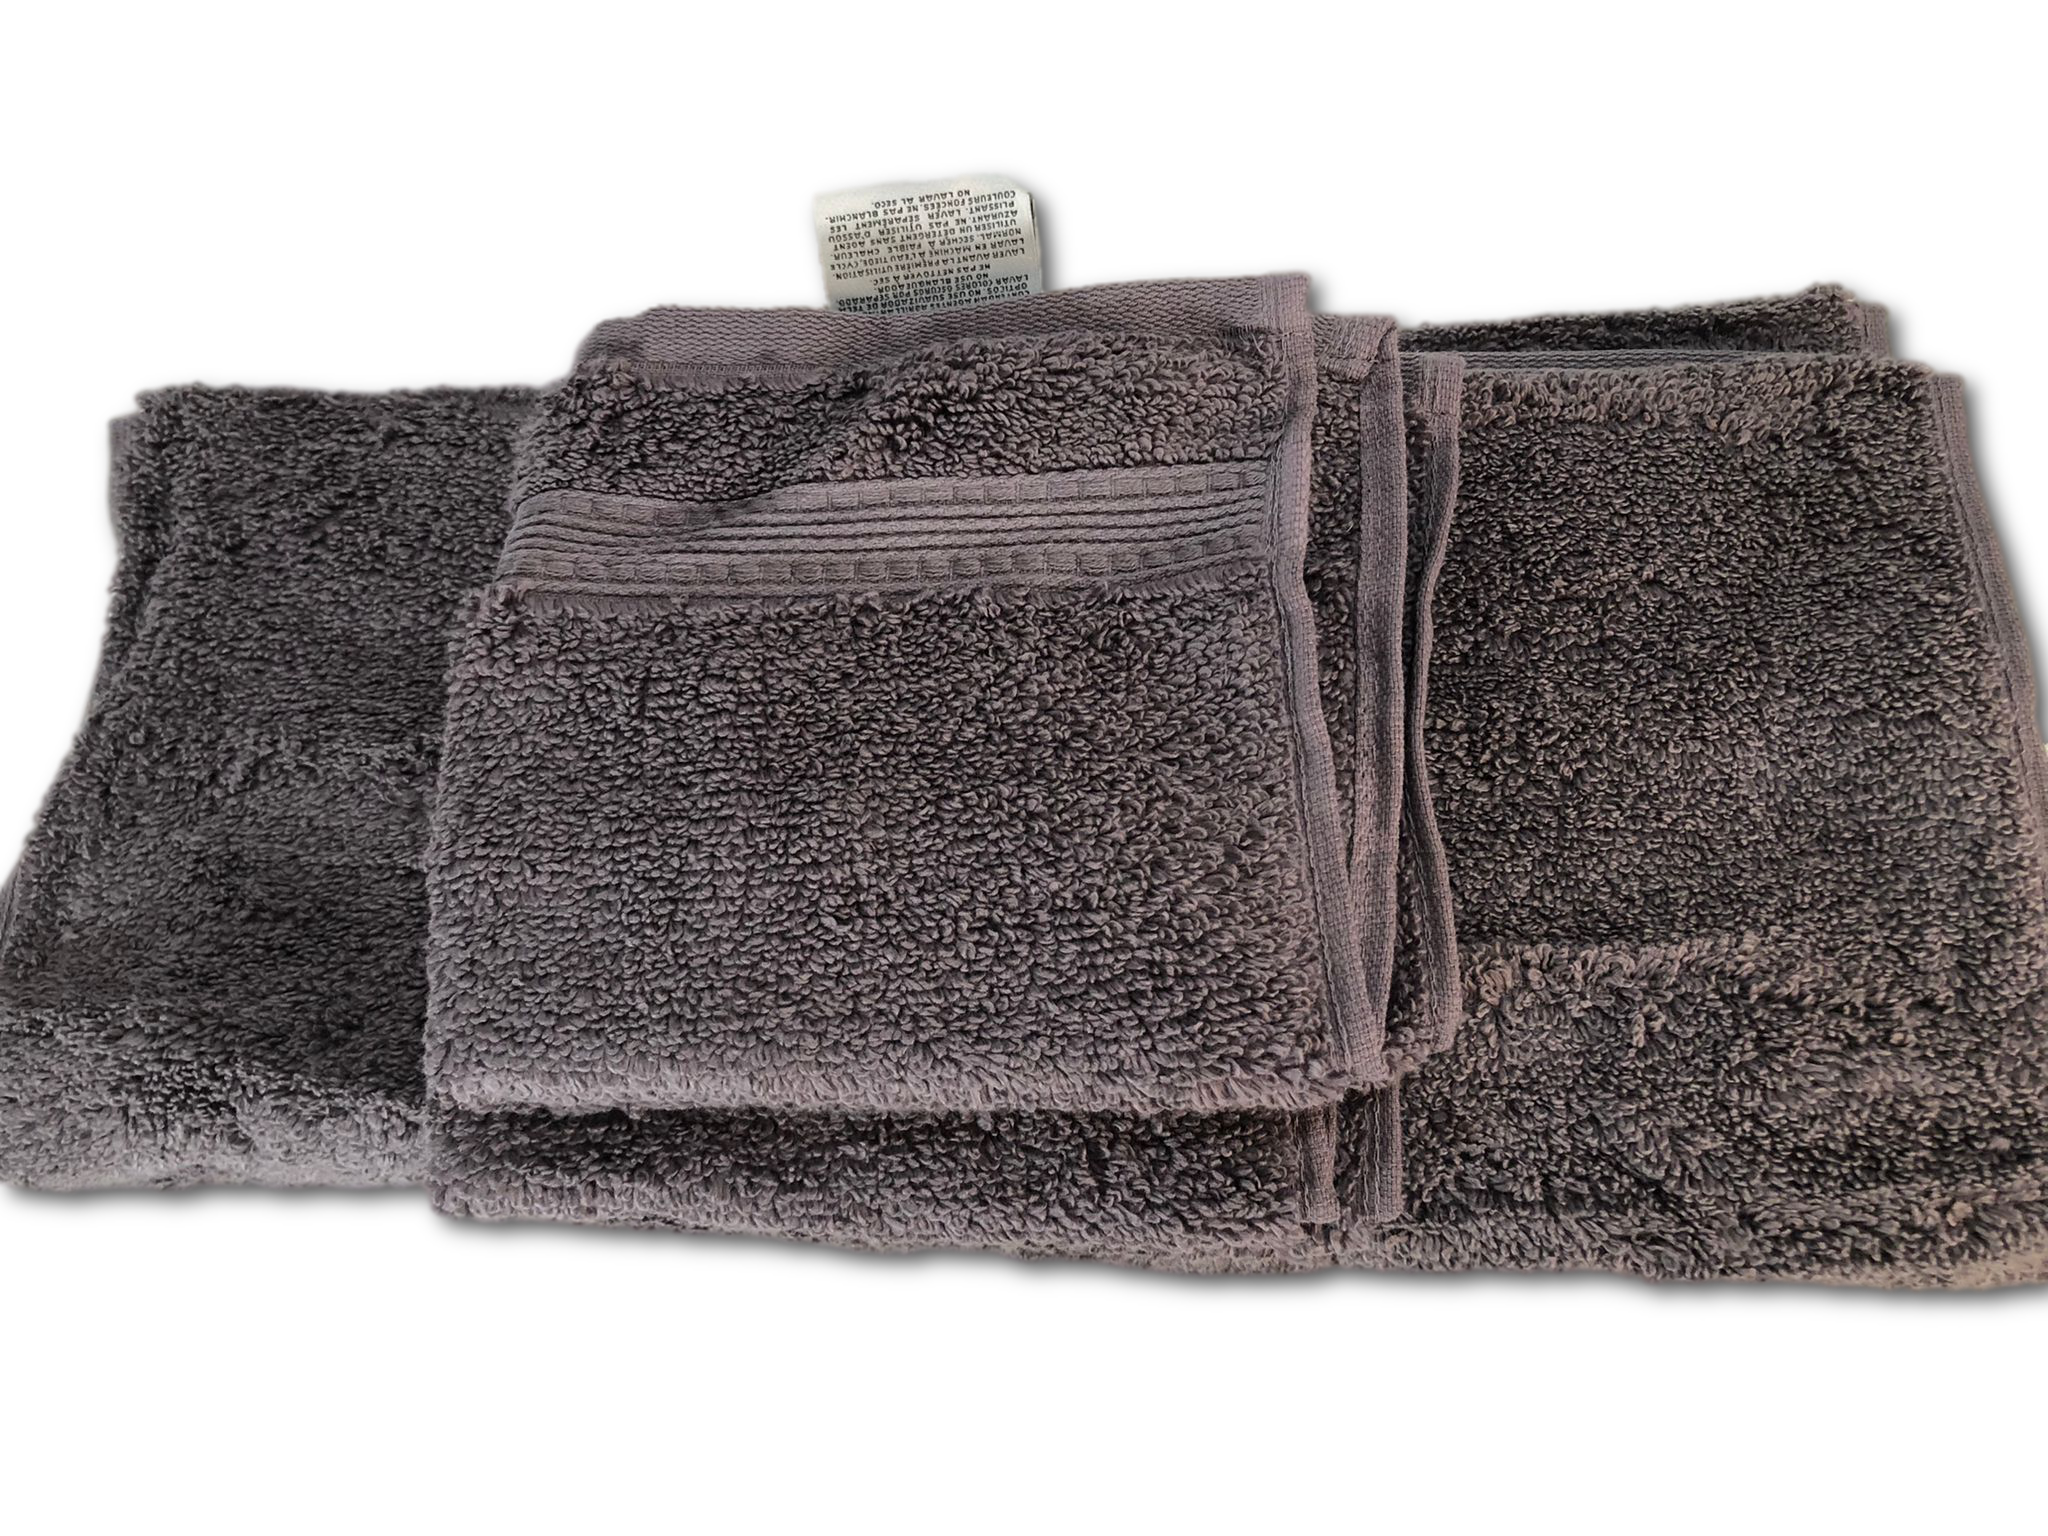 Charisma 4-Pc Hand Towel + Wash Cloth Set